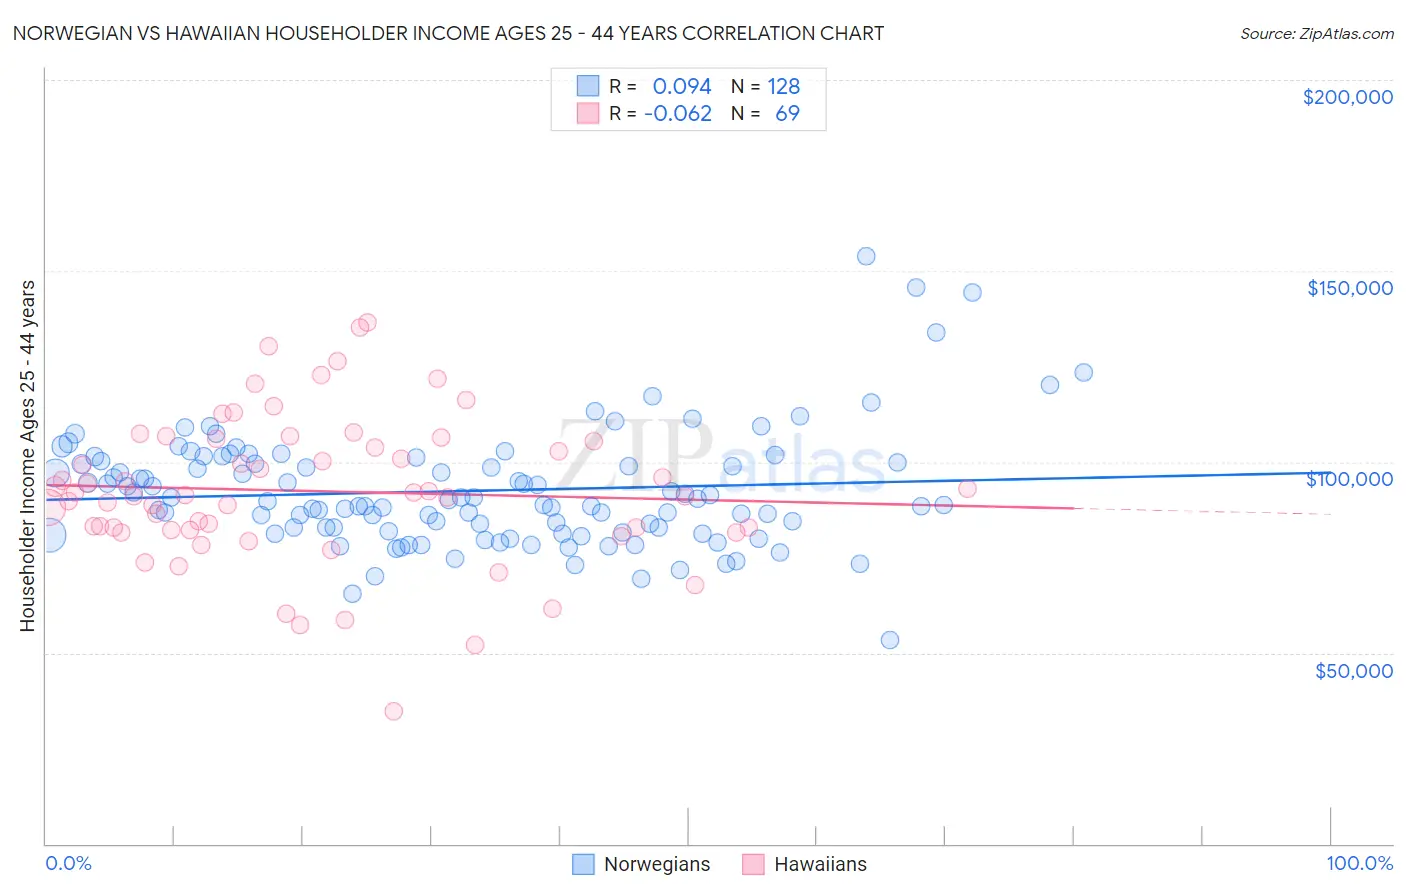 Norwegian vs Hawaiian Householder Income Ages 25 - 44 years